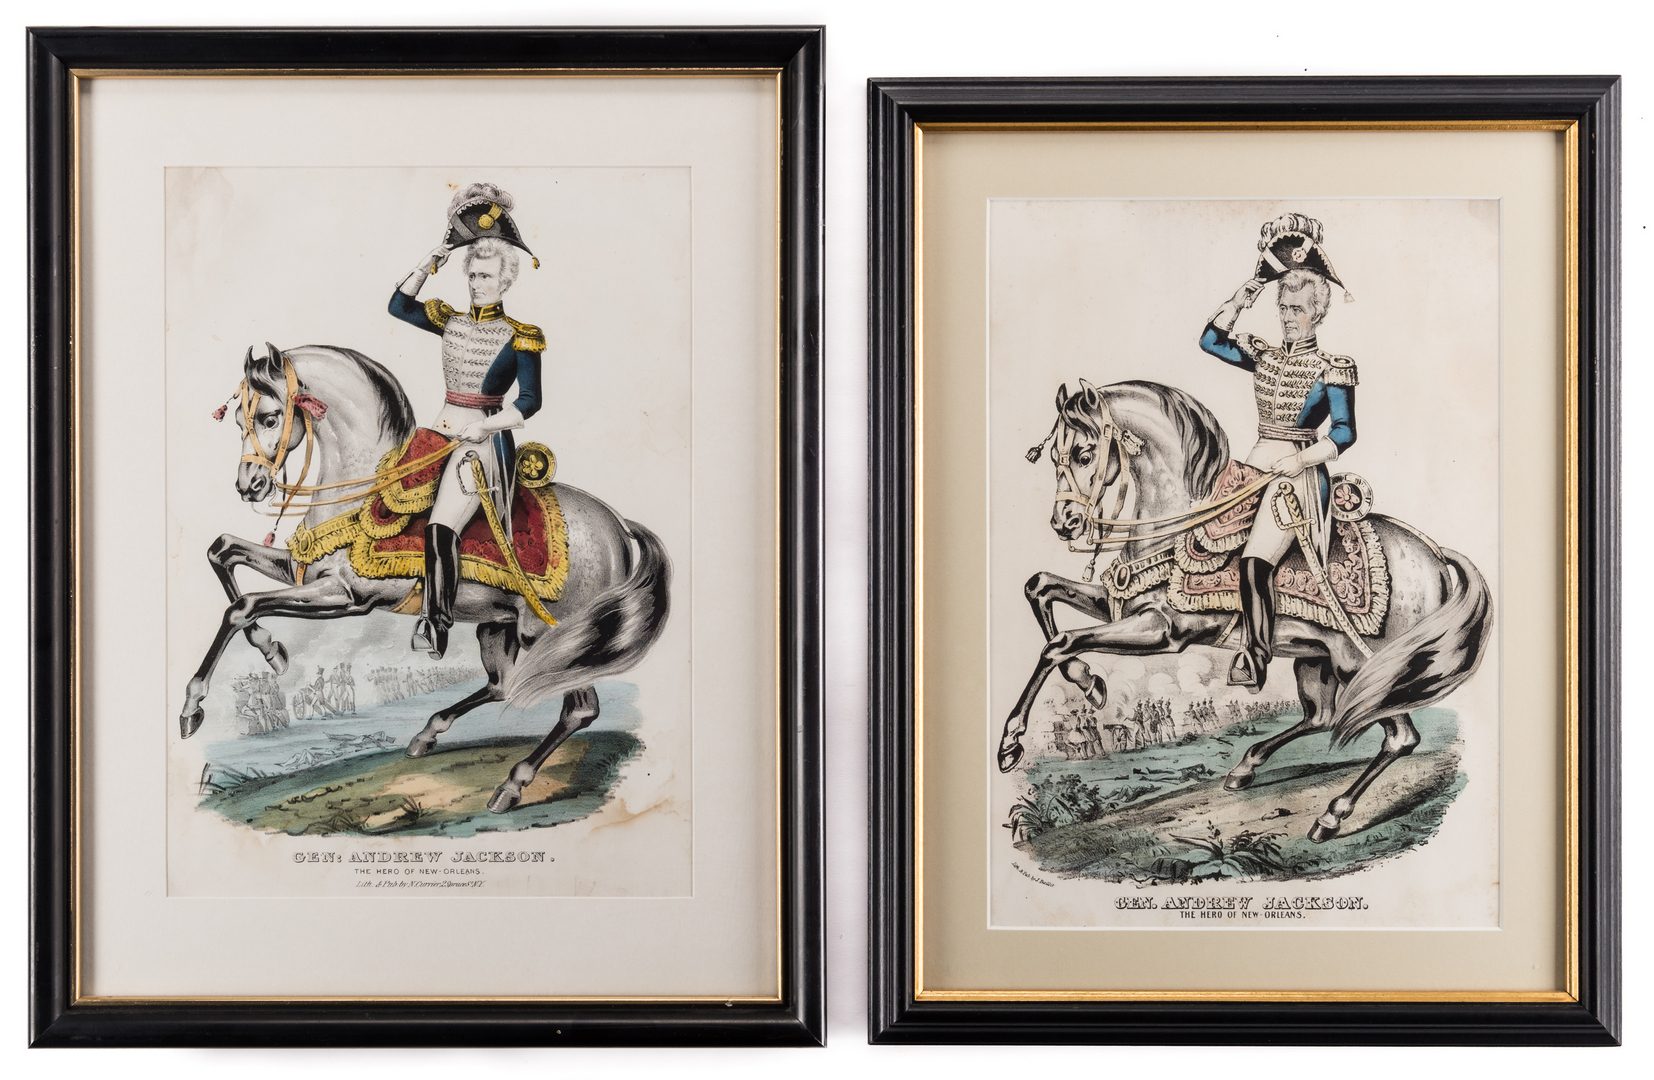 Lot 435: 5 Framed Andrew Jackson Prints